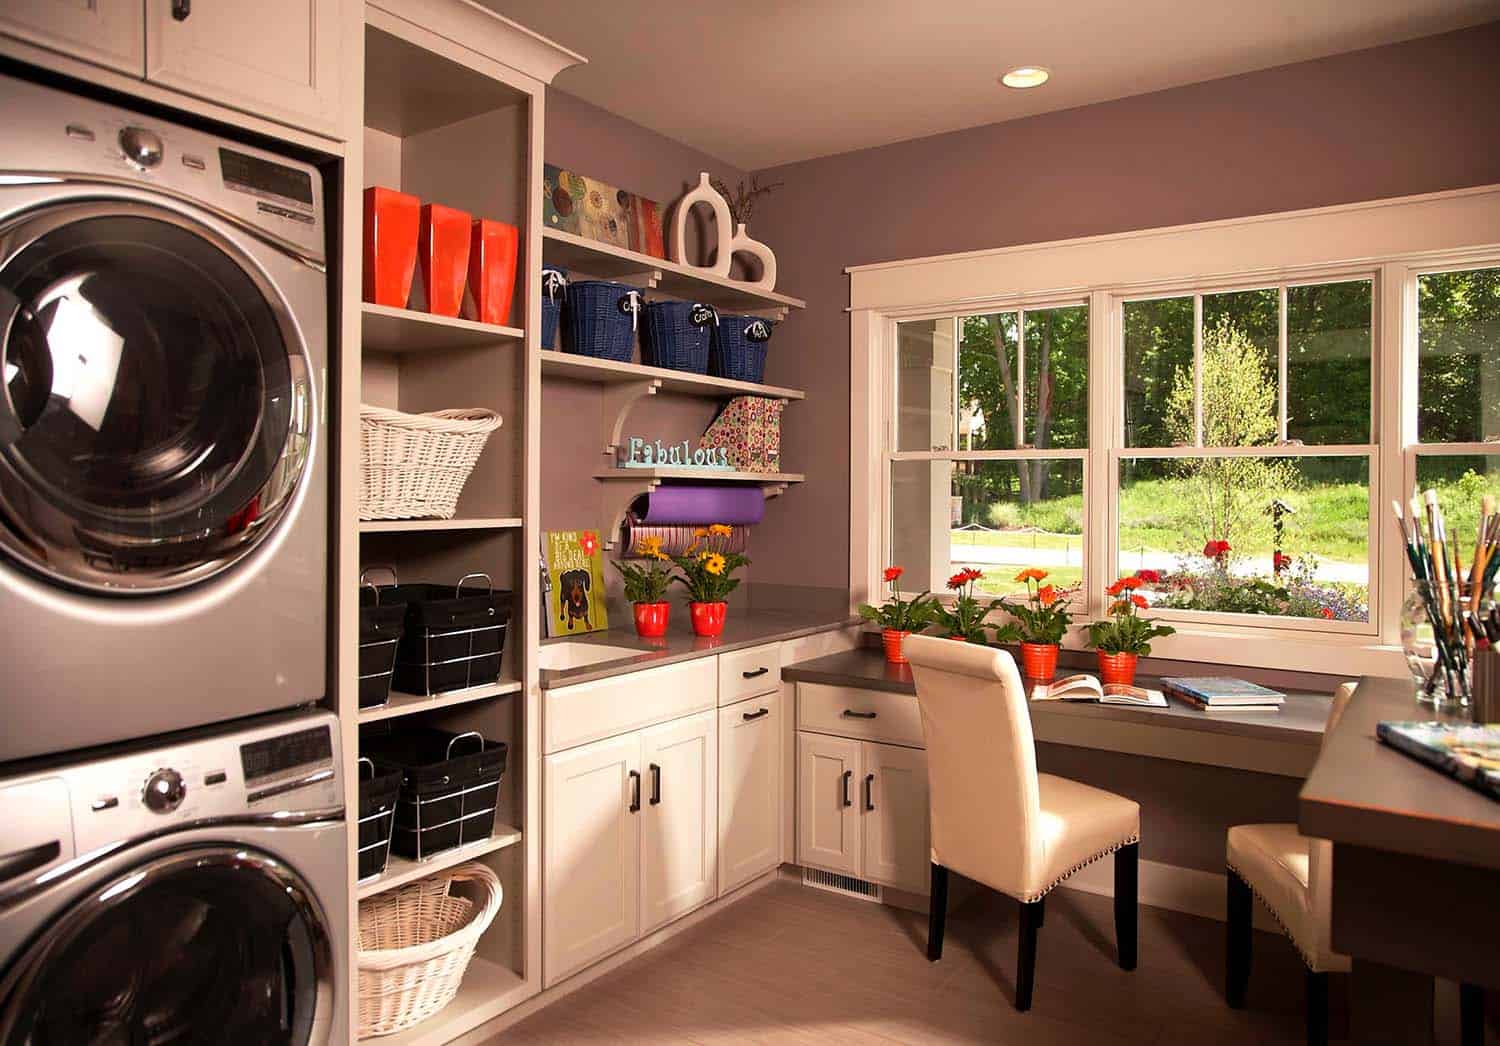 multifunctional-laundry-room-ideas